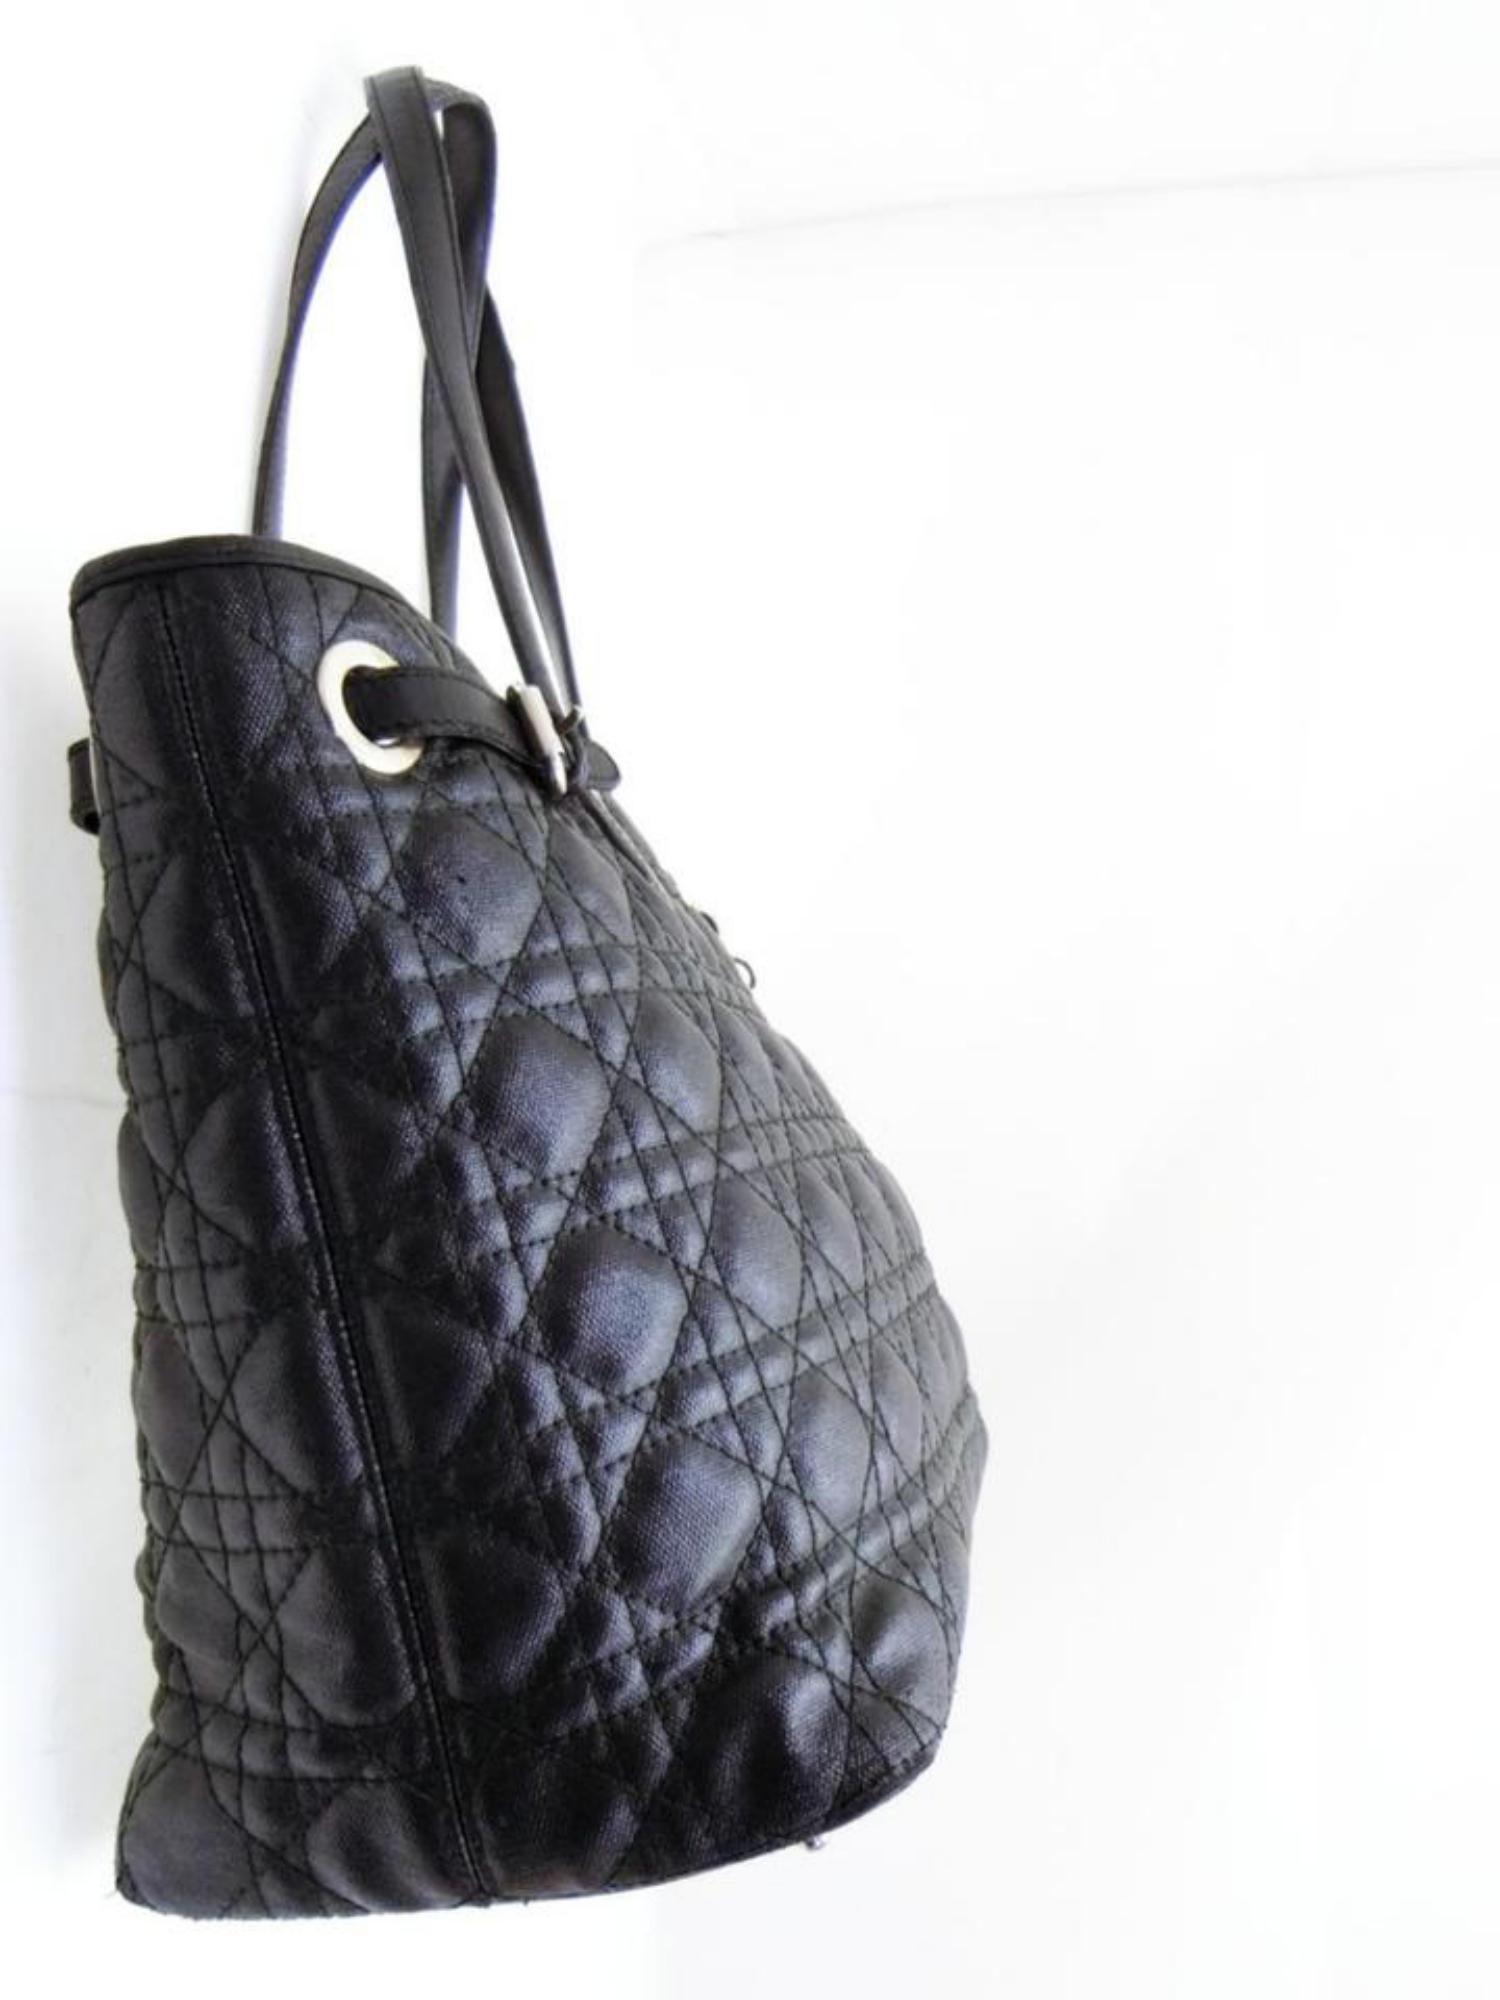 Dior Quilted Leather Cannage Shopper Tote 233793 Black Canvas Shoulder Bag For Sale 2